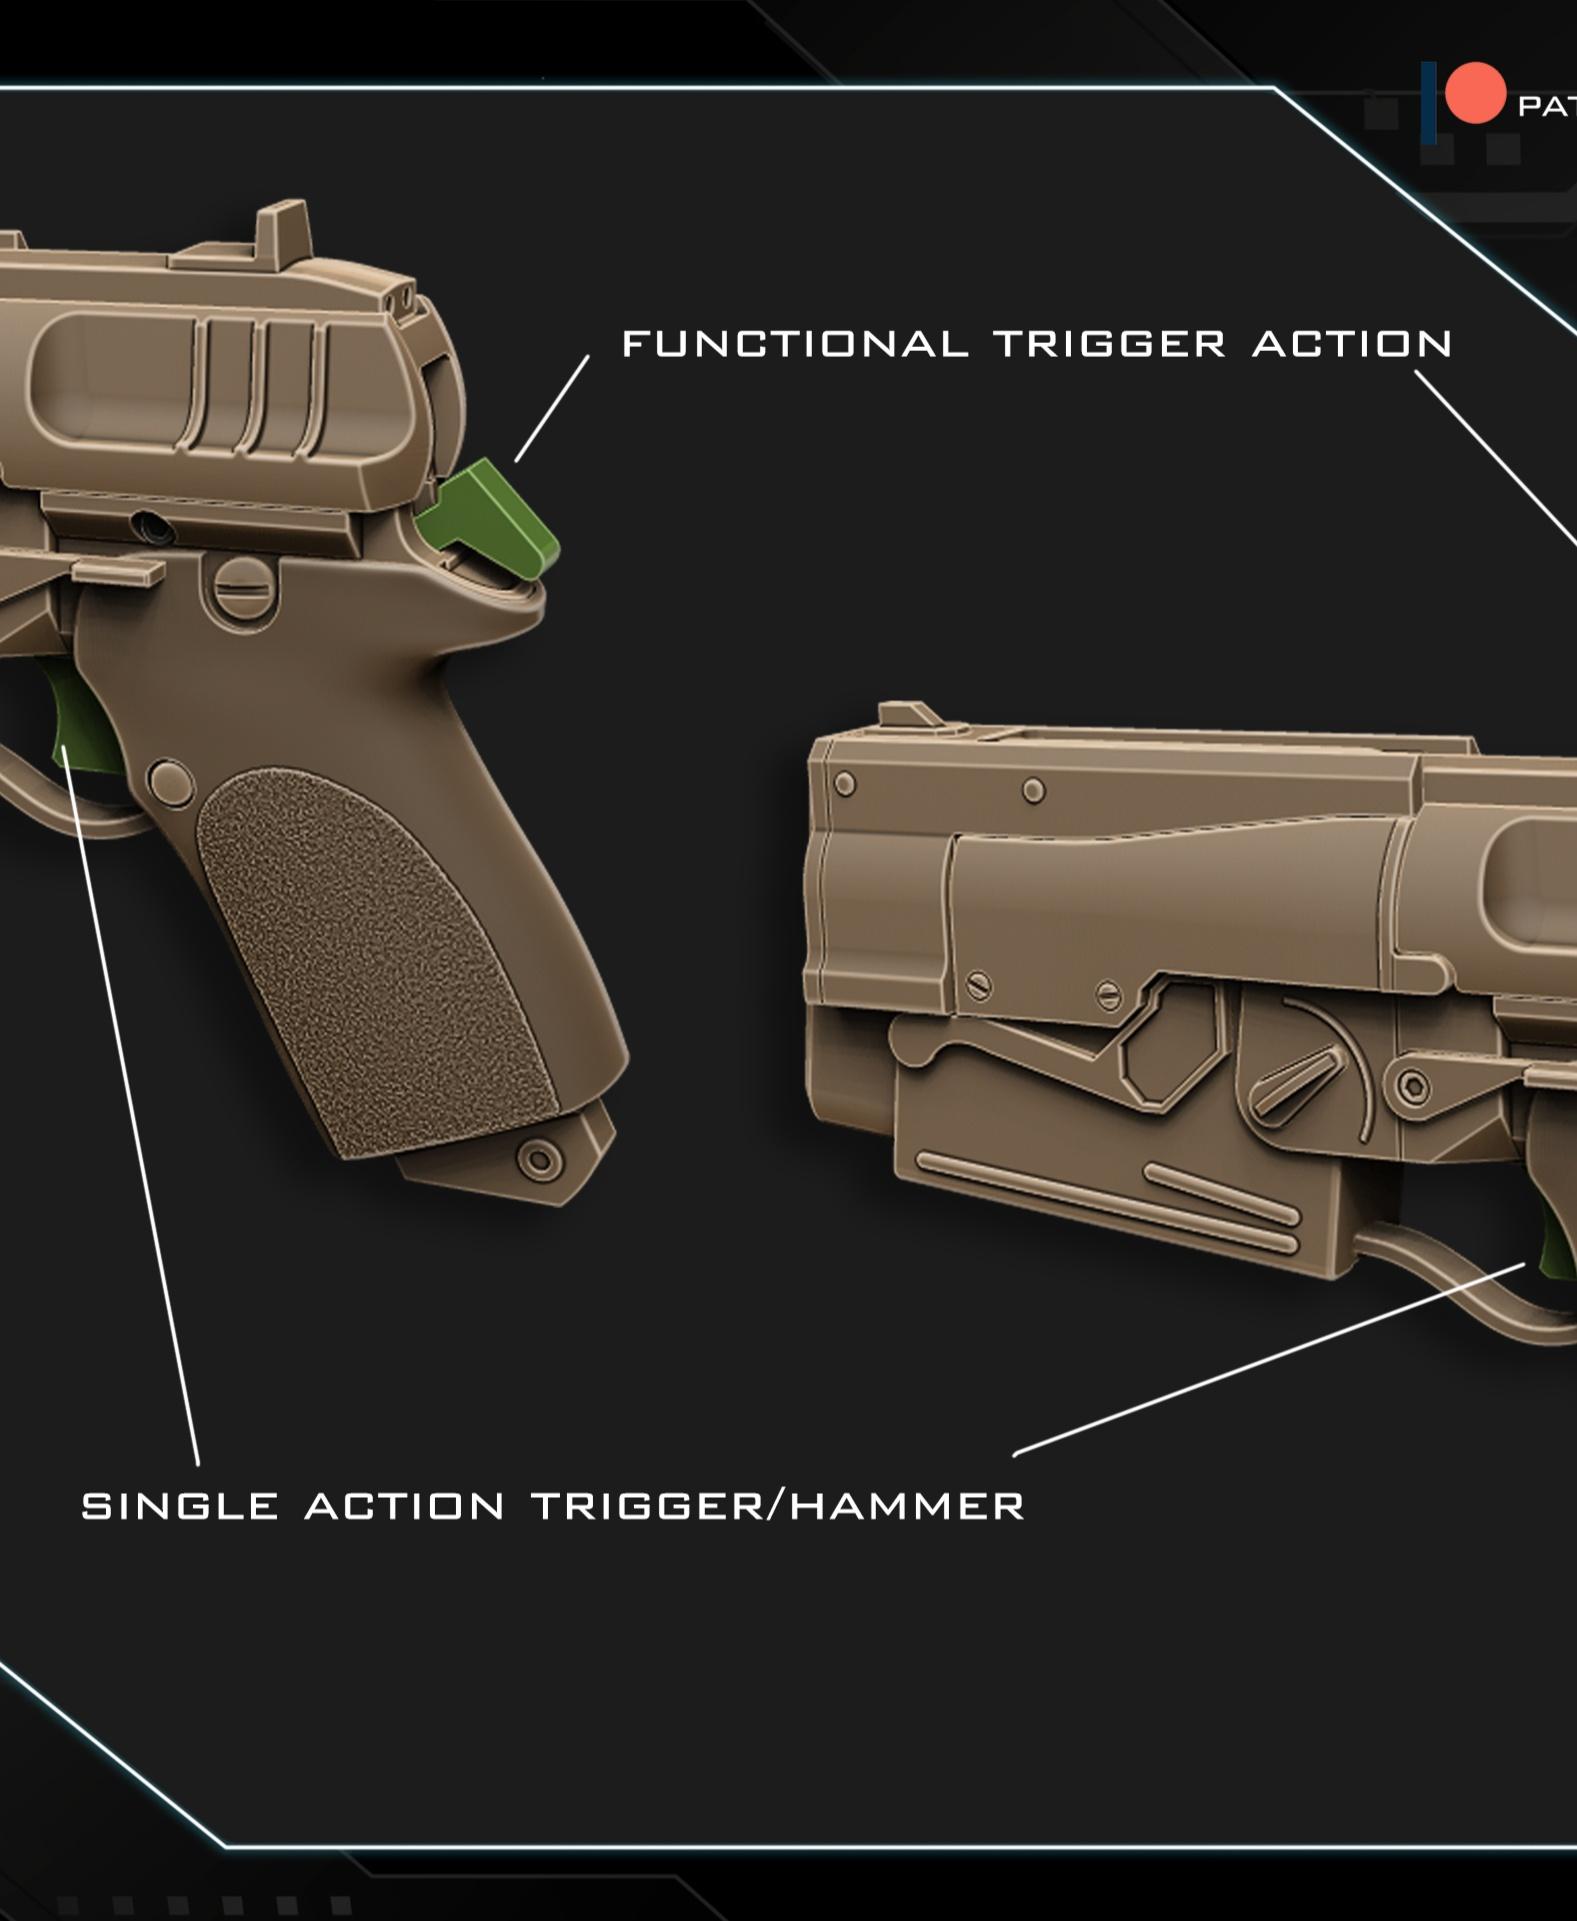 10 mm blaster 2 - Fallout - functional trigger / hammer action 3d model